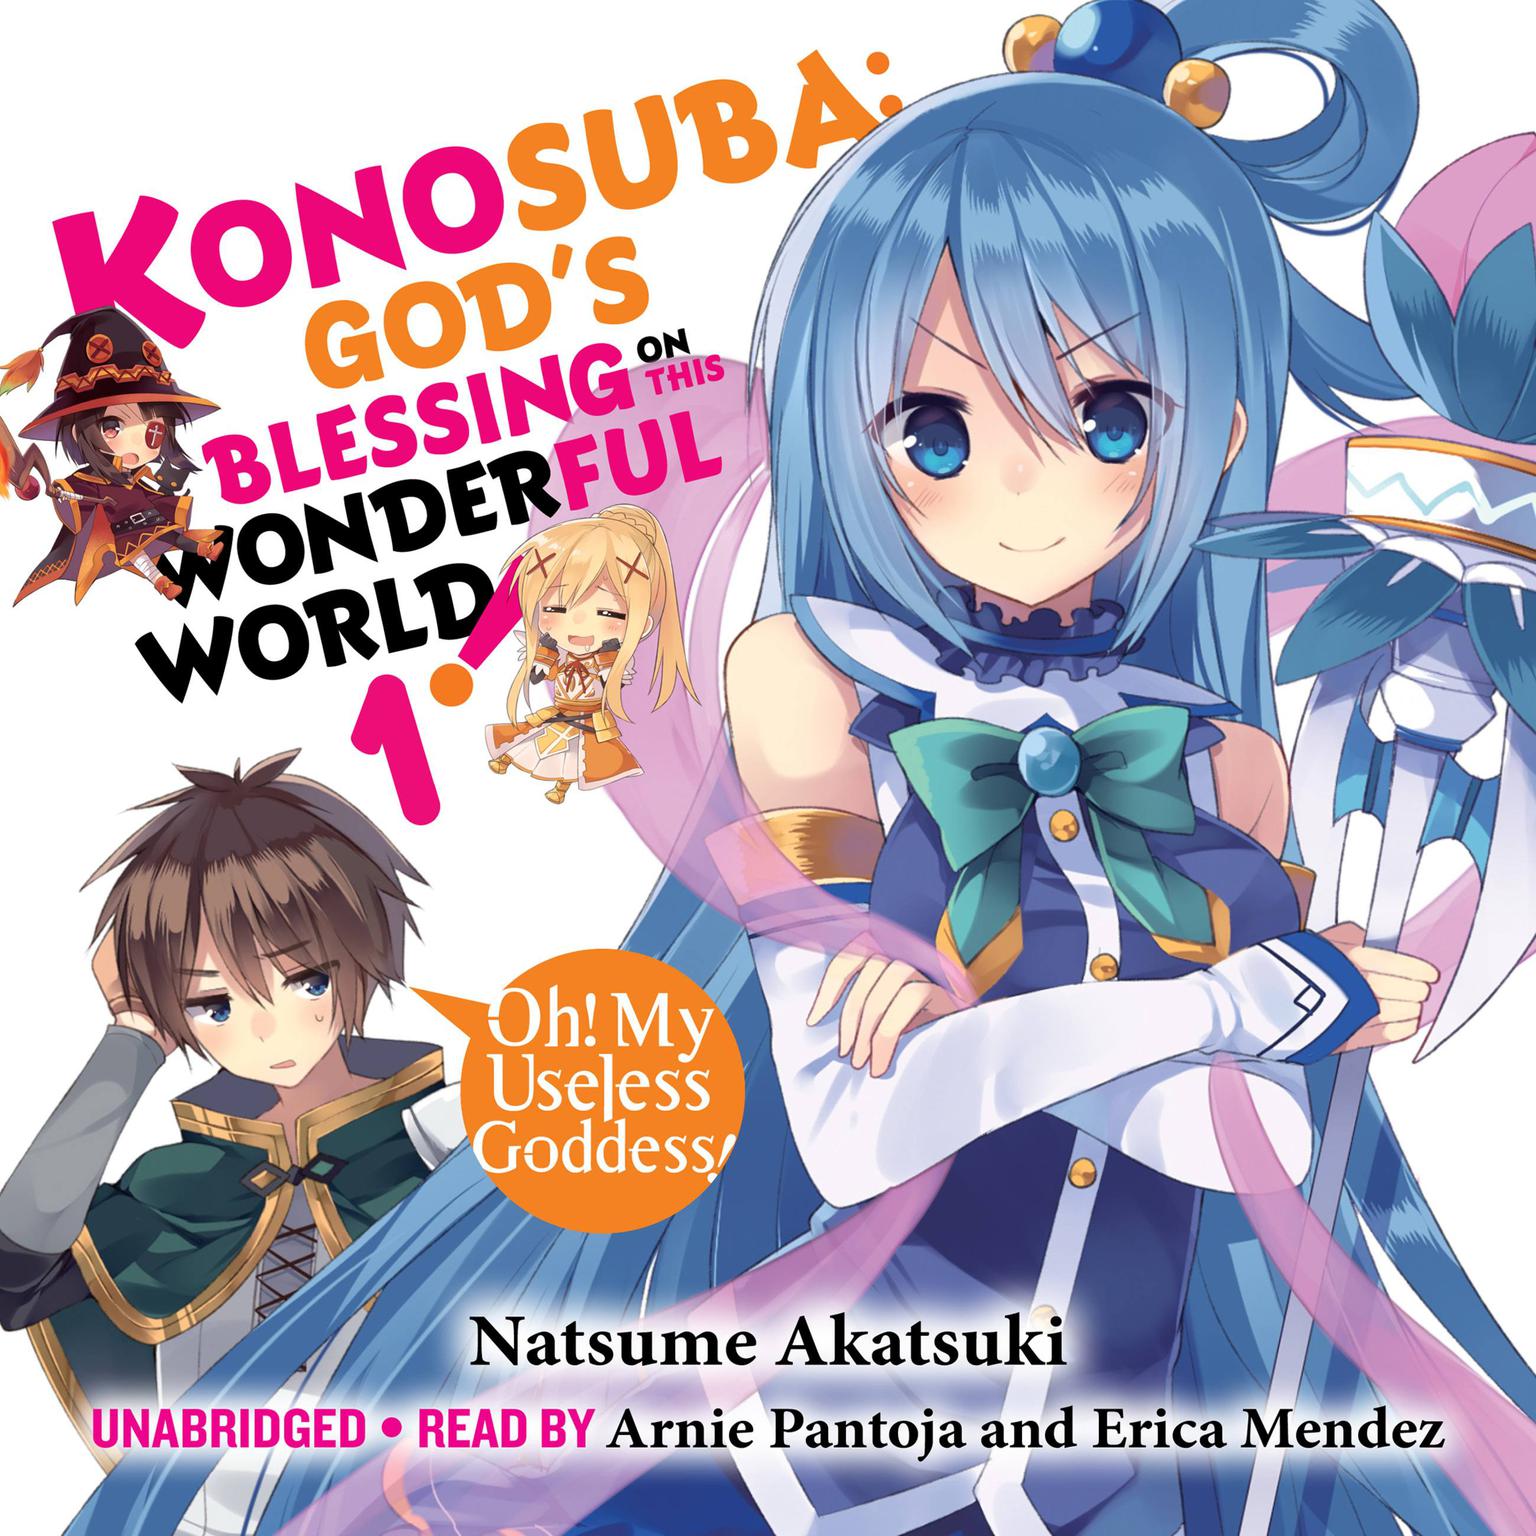 Konosuba: Gods Blessing on This Wonderful World!, Vol. 1: Oh! My Useless Goddess! Audiobook, by Natsume Akatsuki